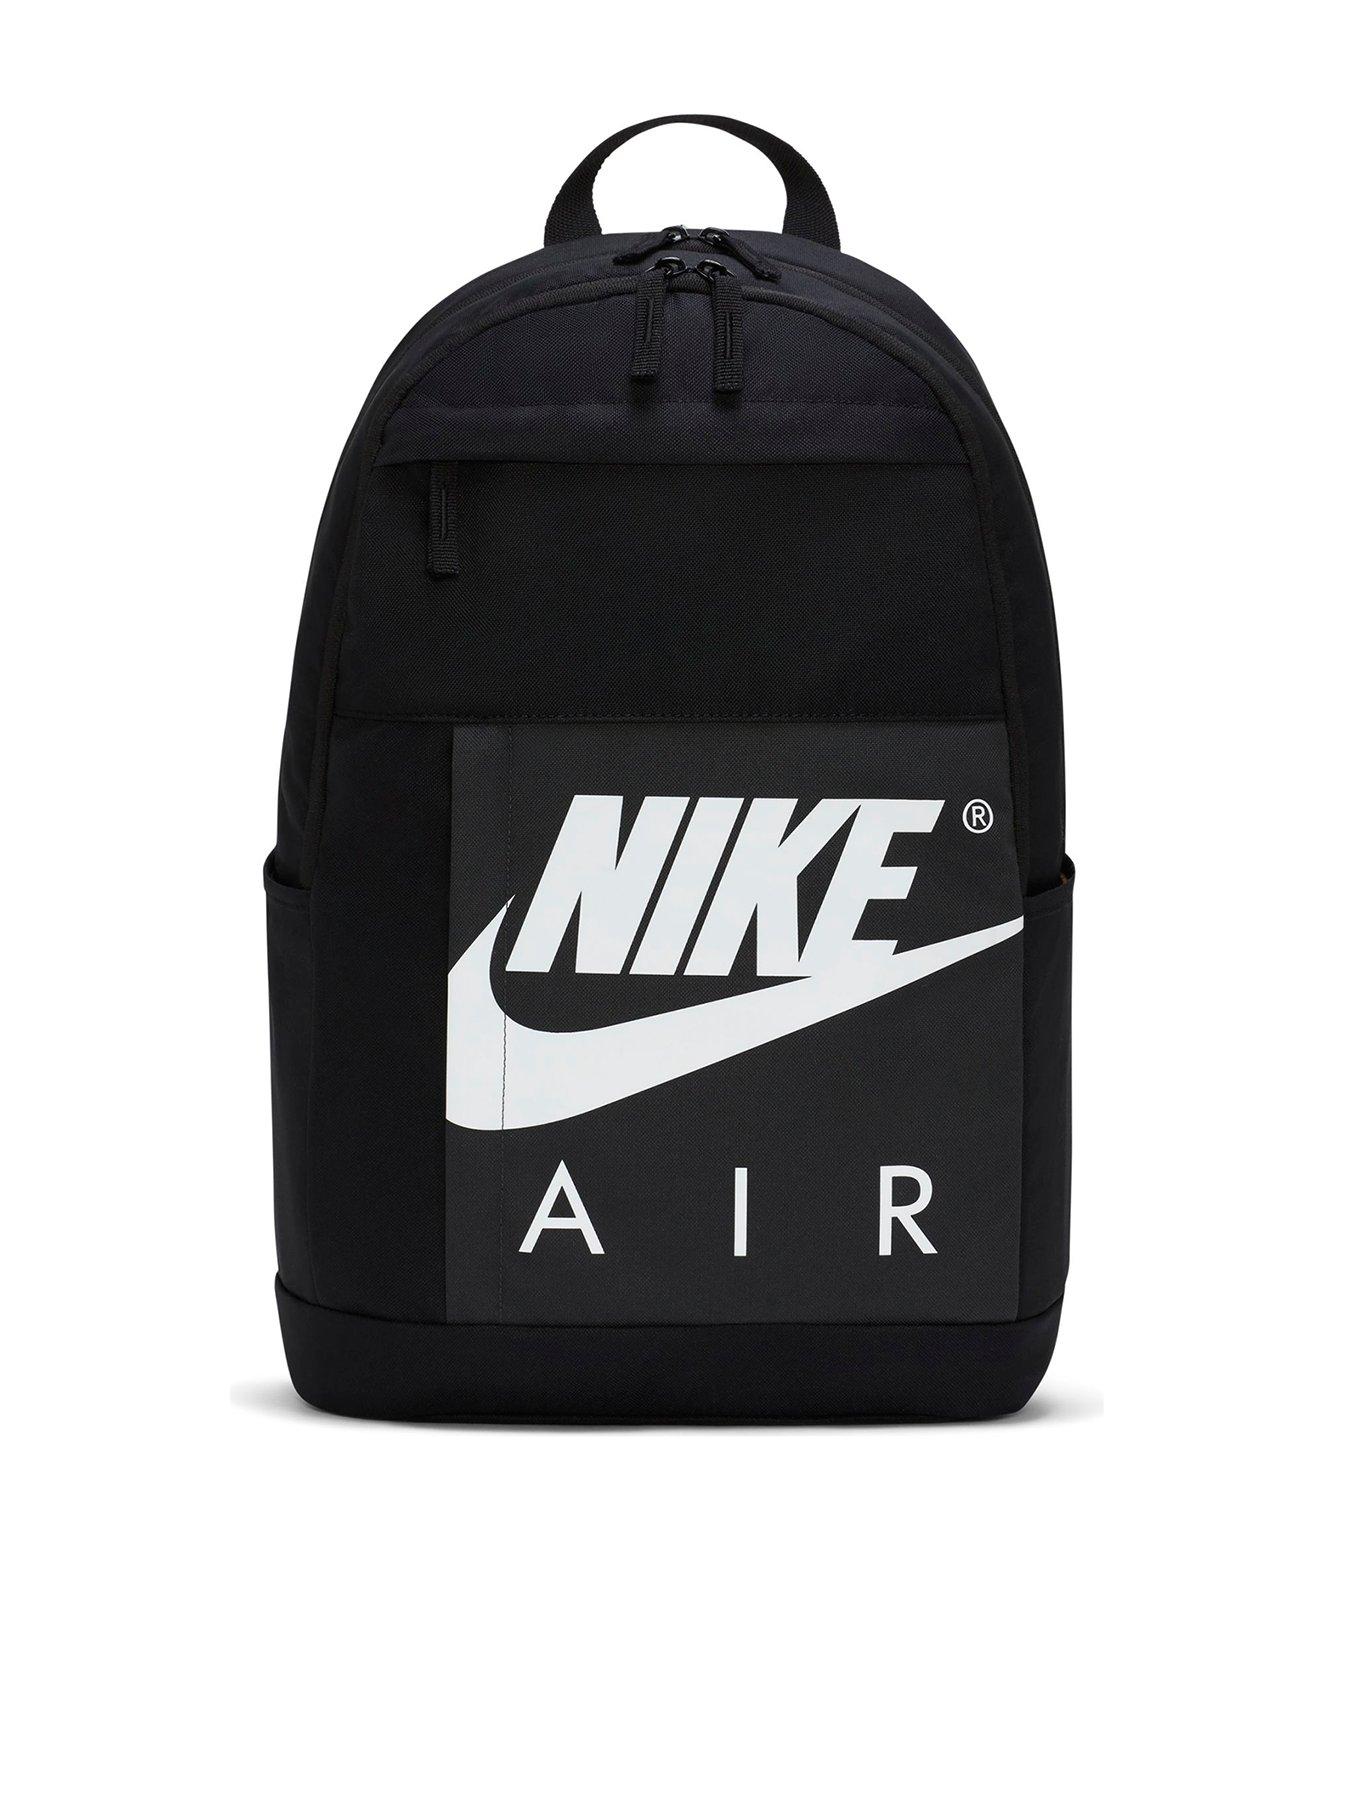 Accessories Air Elemental Backpack - Black/White